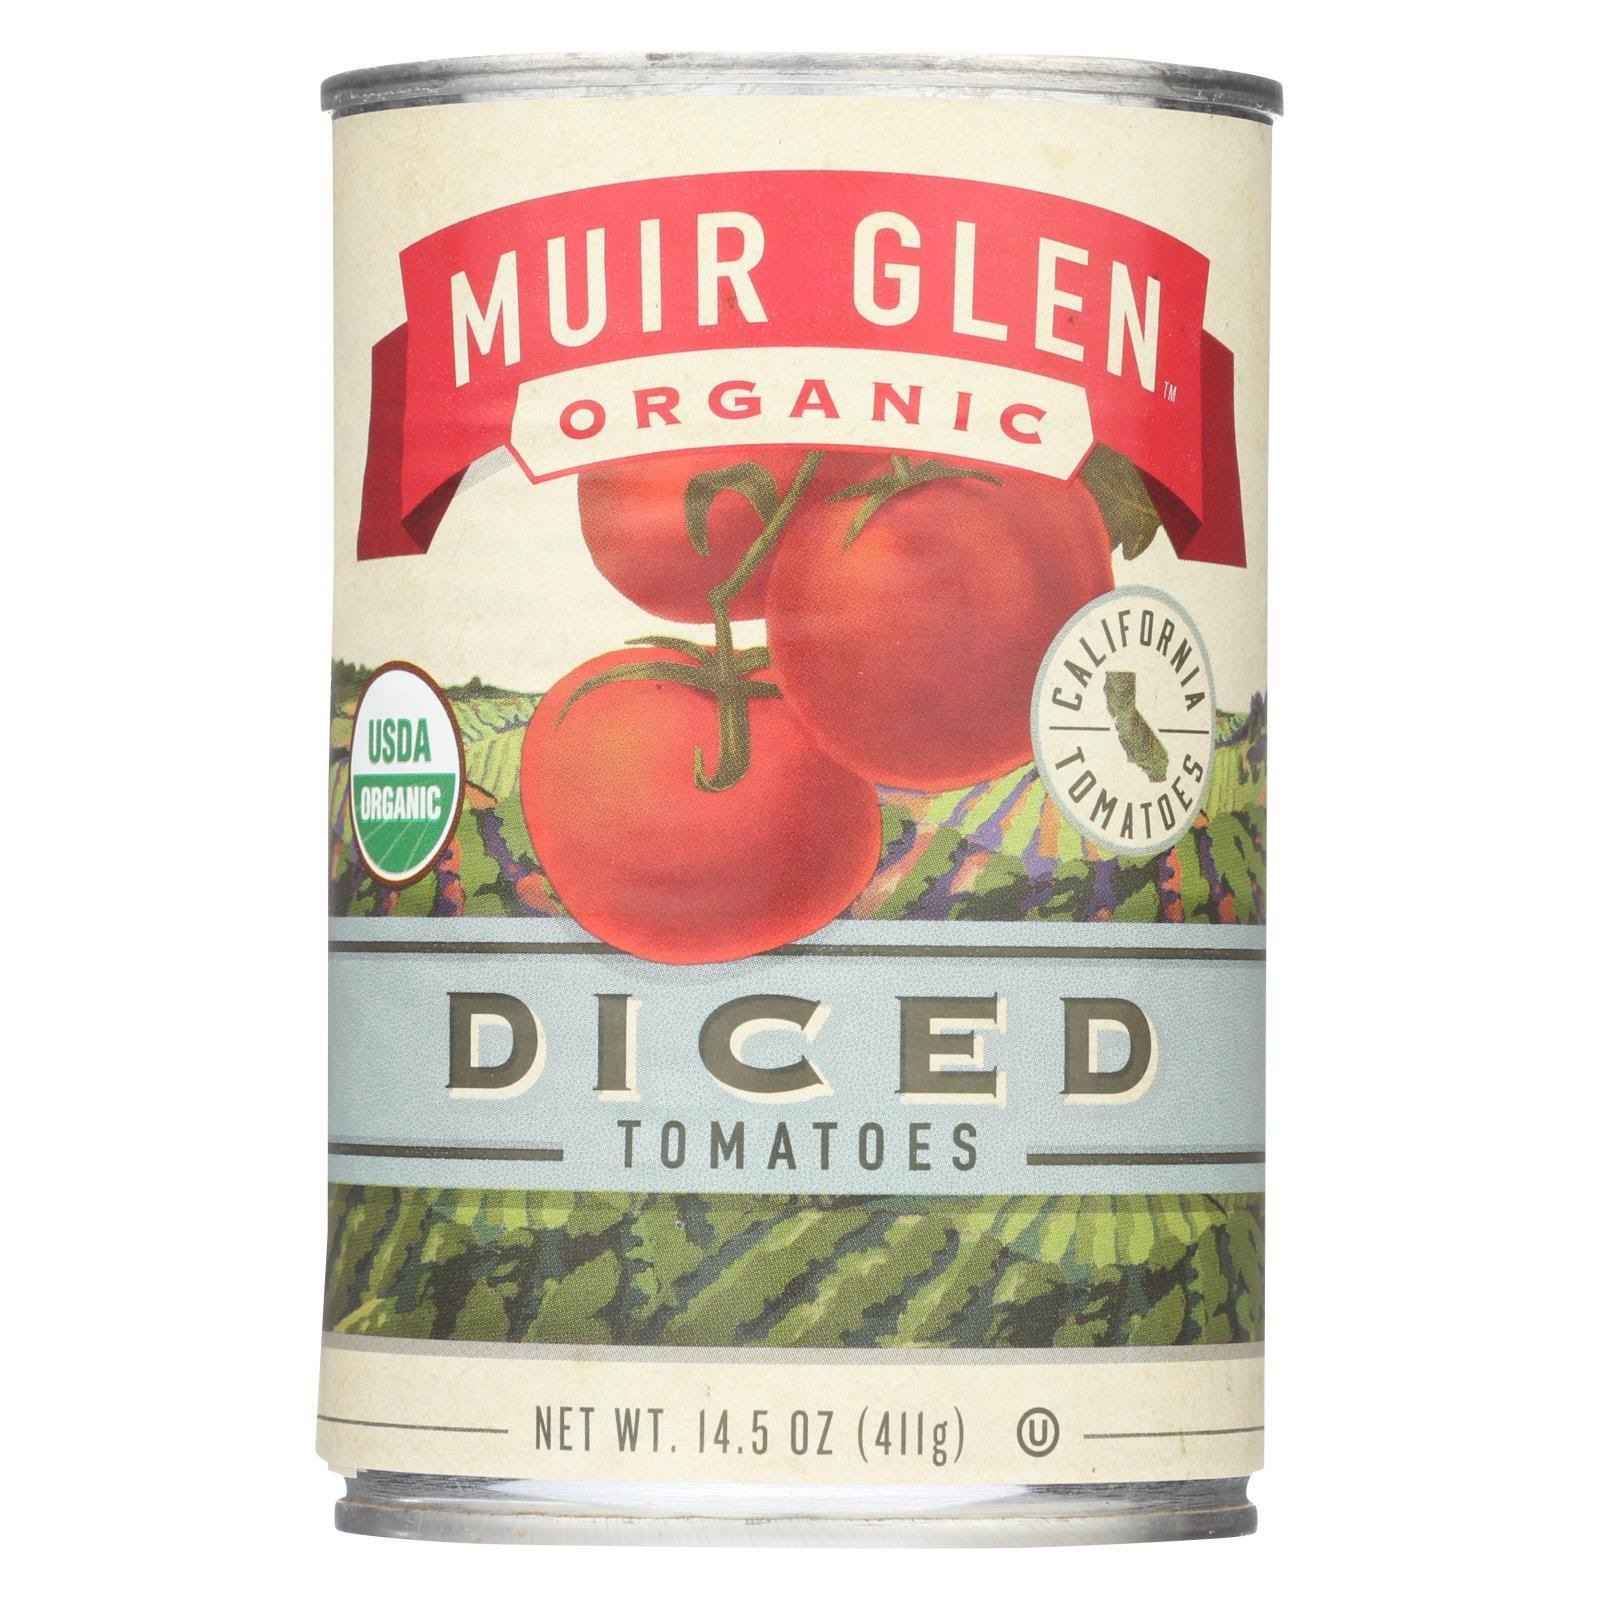 Muir Glen Organic Diced Tomatoes - 14.5oz